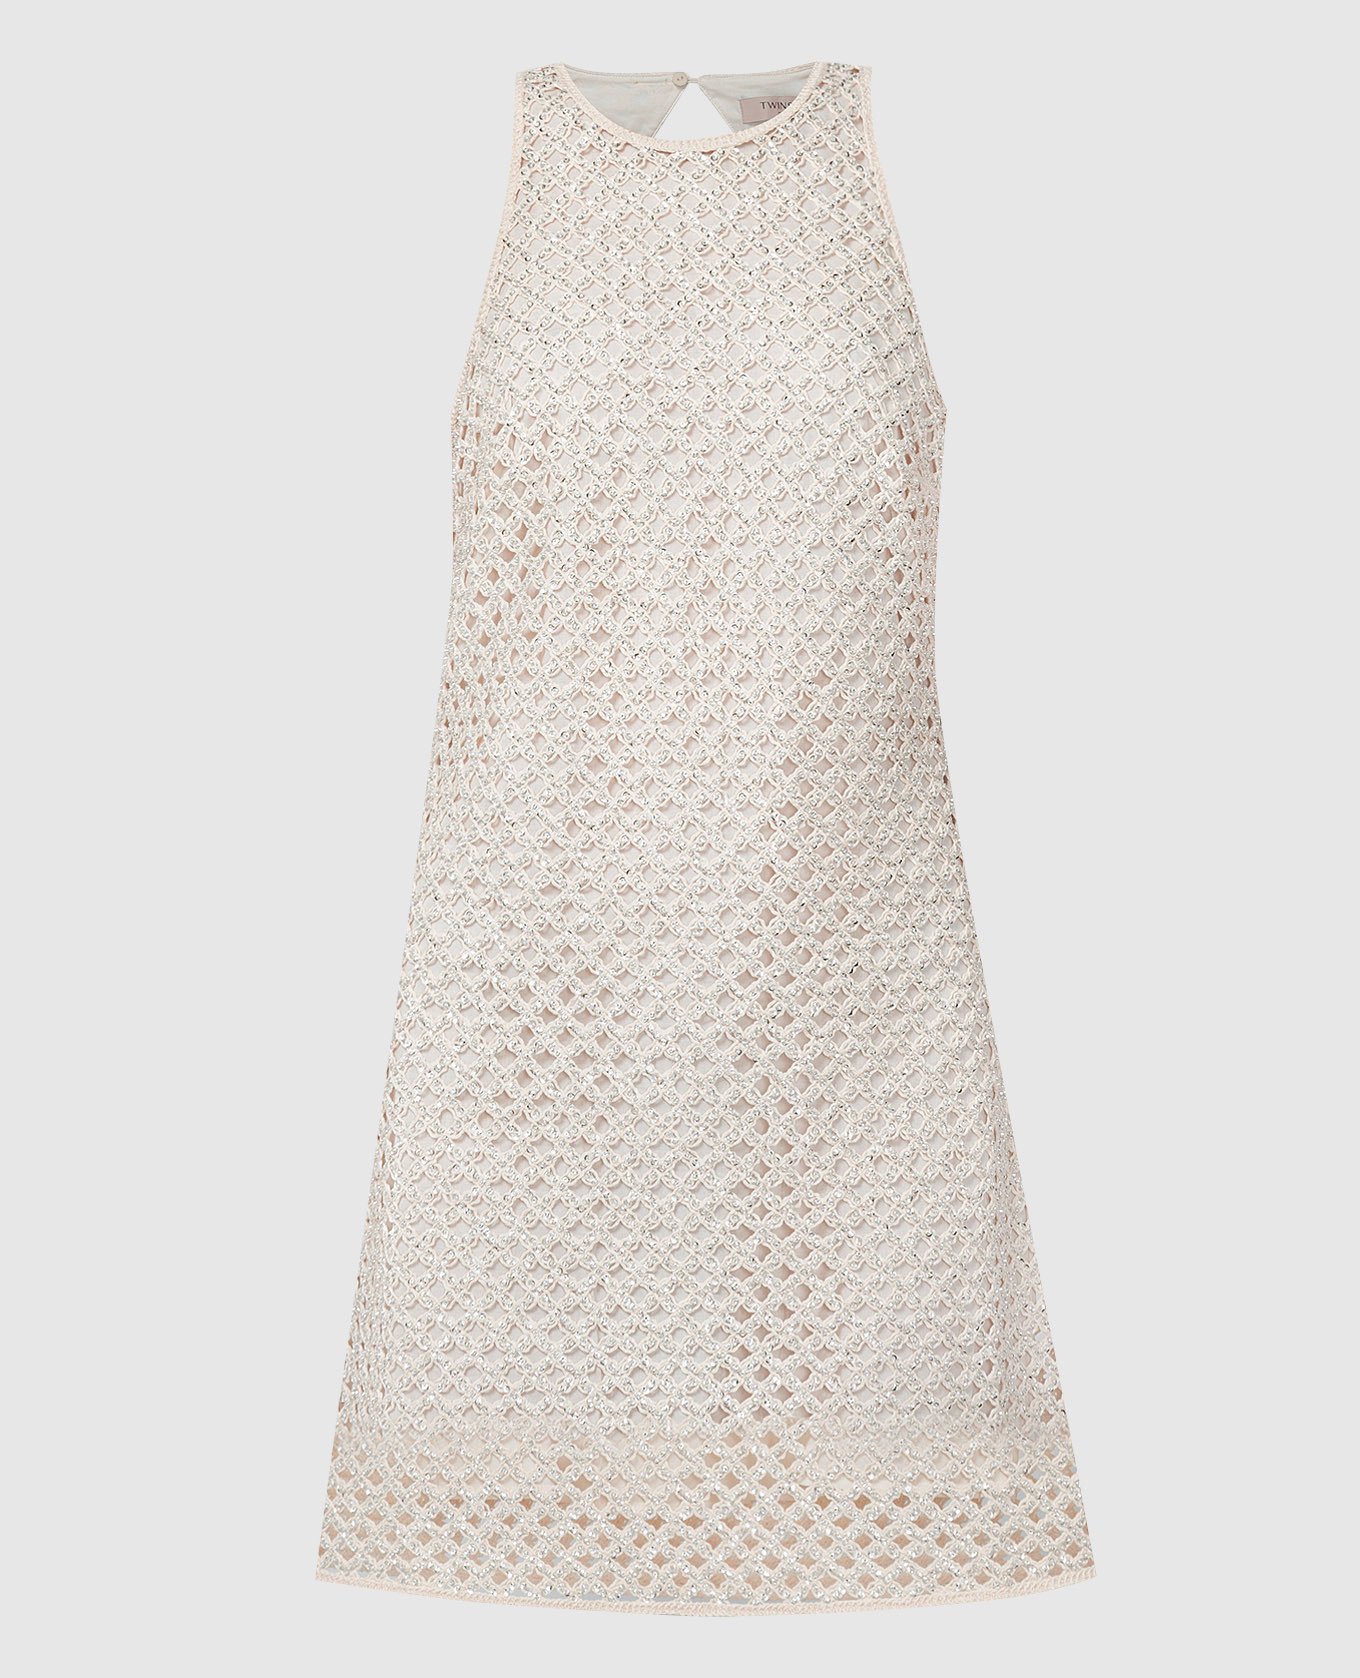 Бежевое ажурное платье мини с бисером